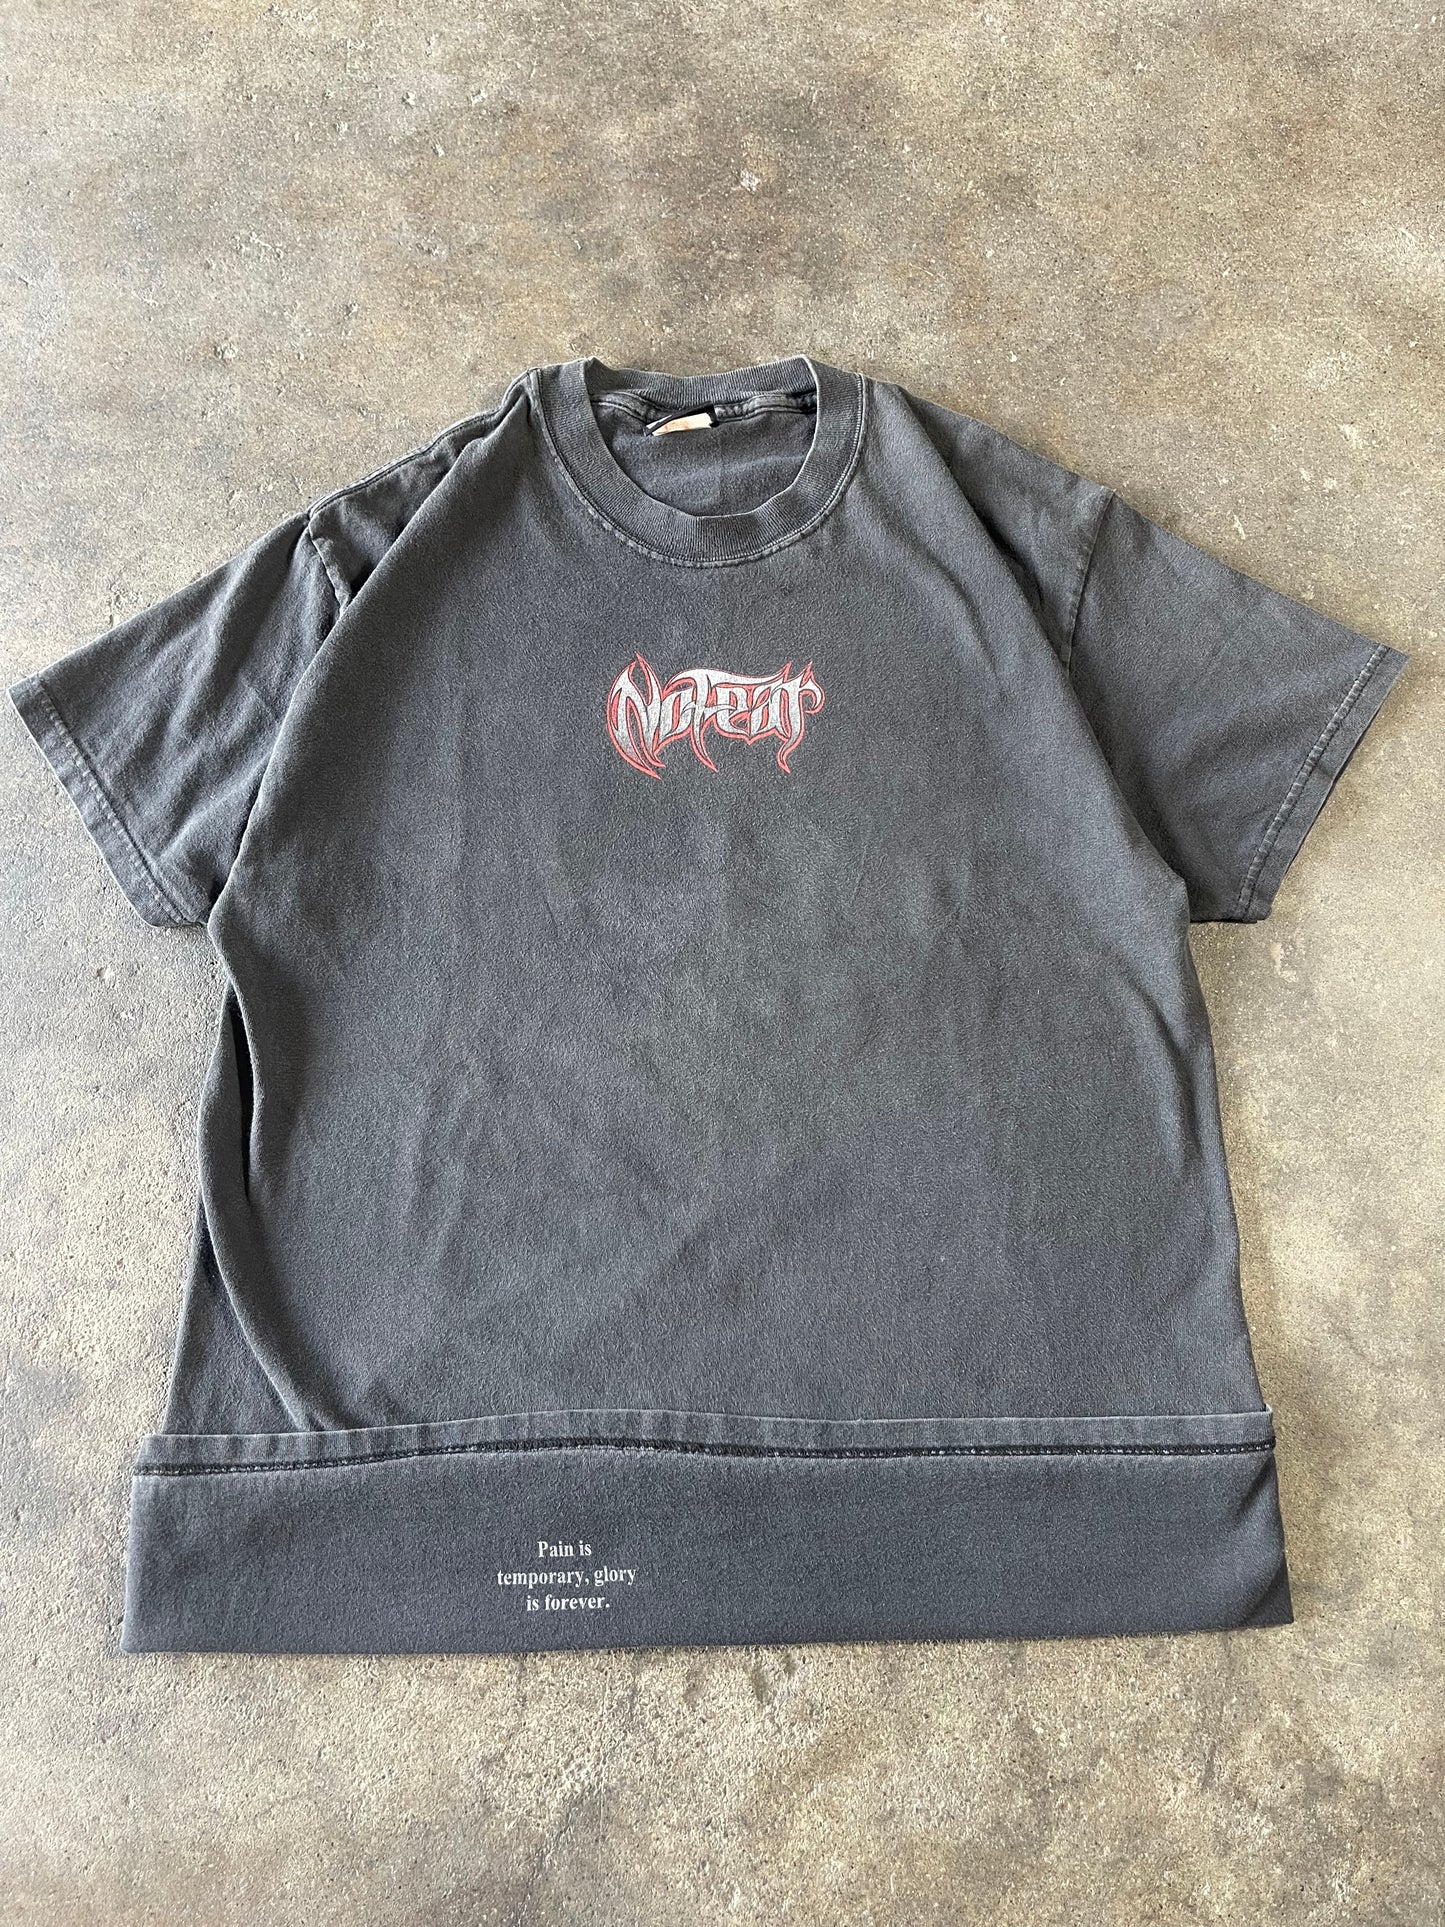 Vintage Ash Black No Fear Shirt Medium